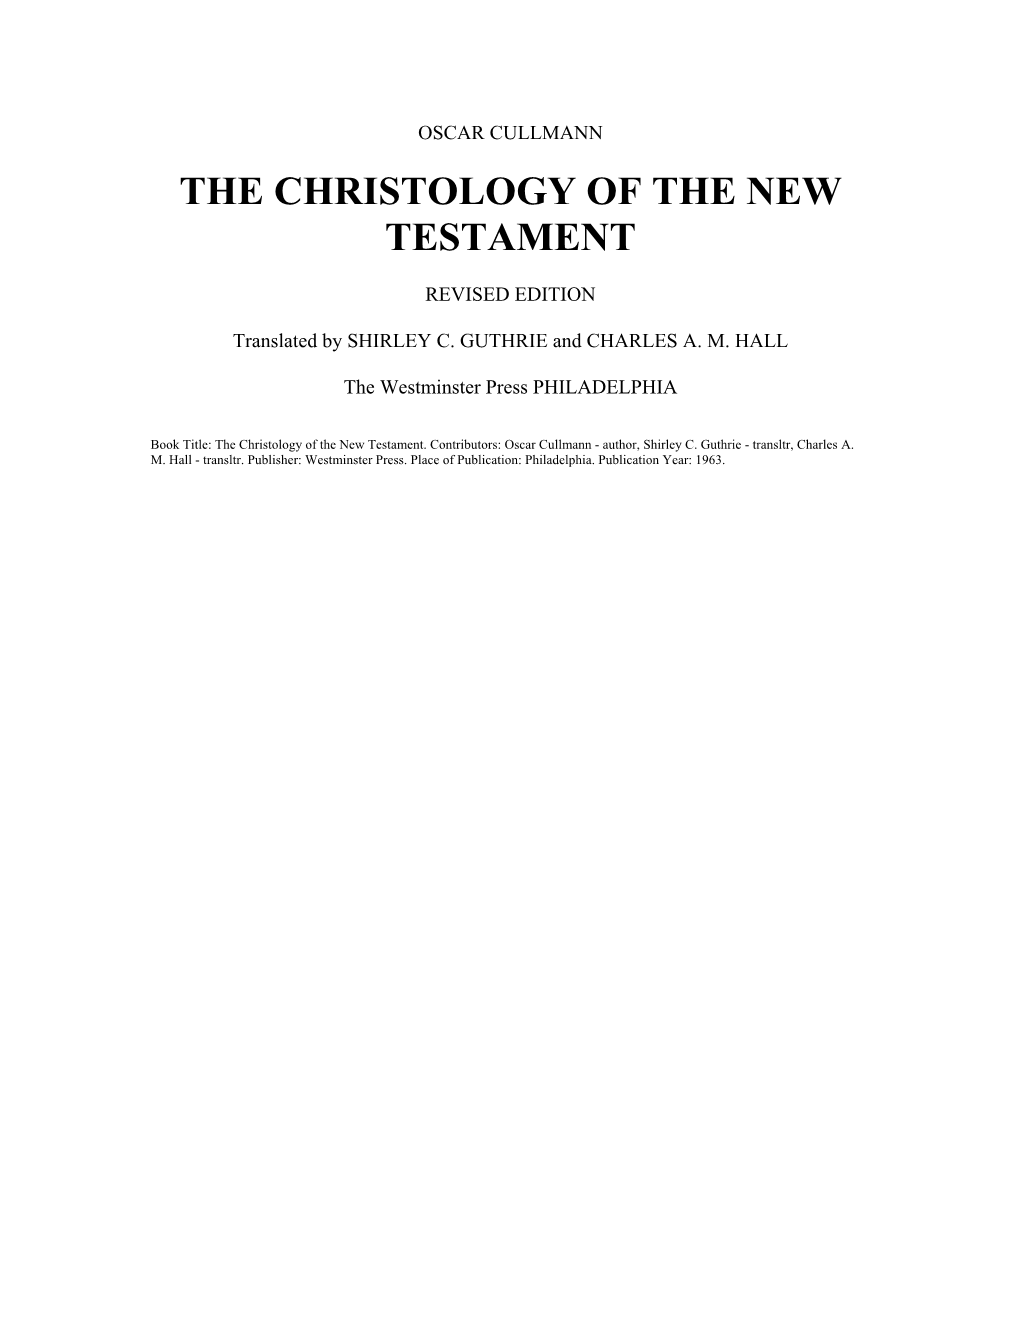 Oscar Cullmann the Christology of the New Testament